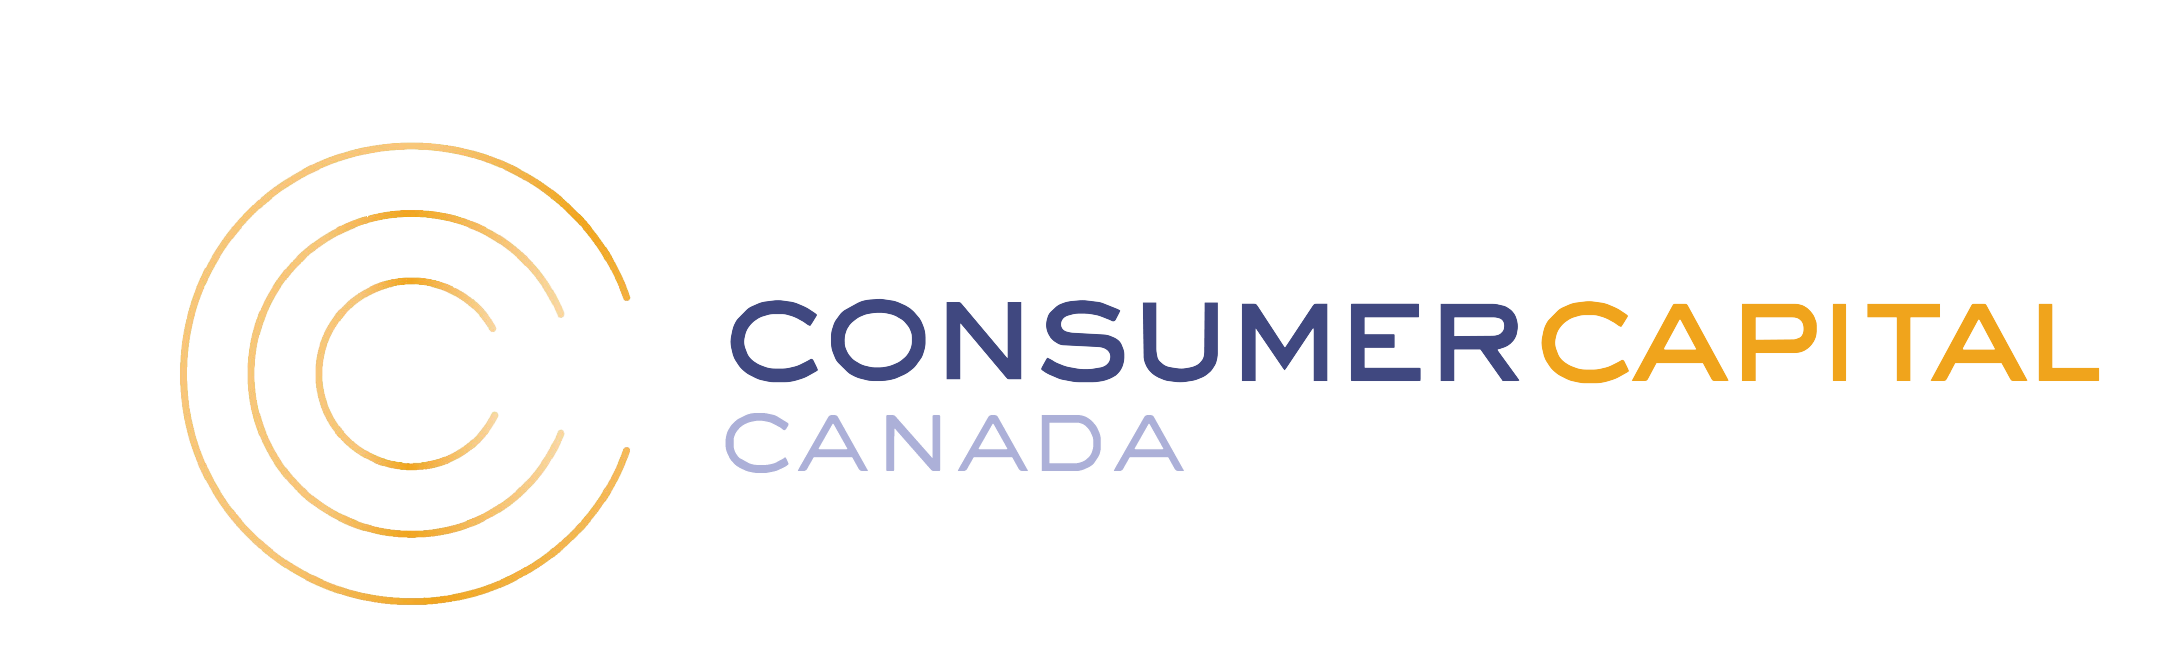 ConsumerCapital logo